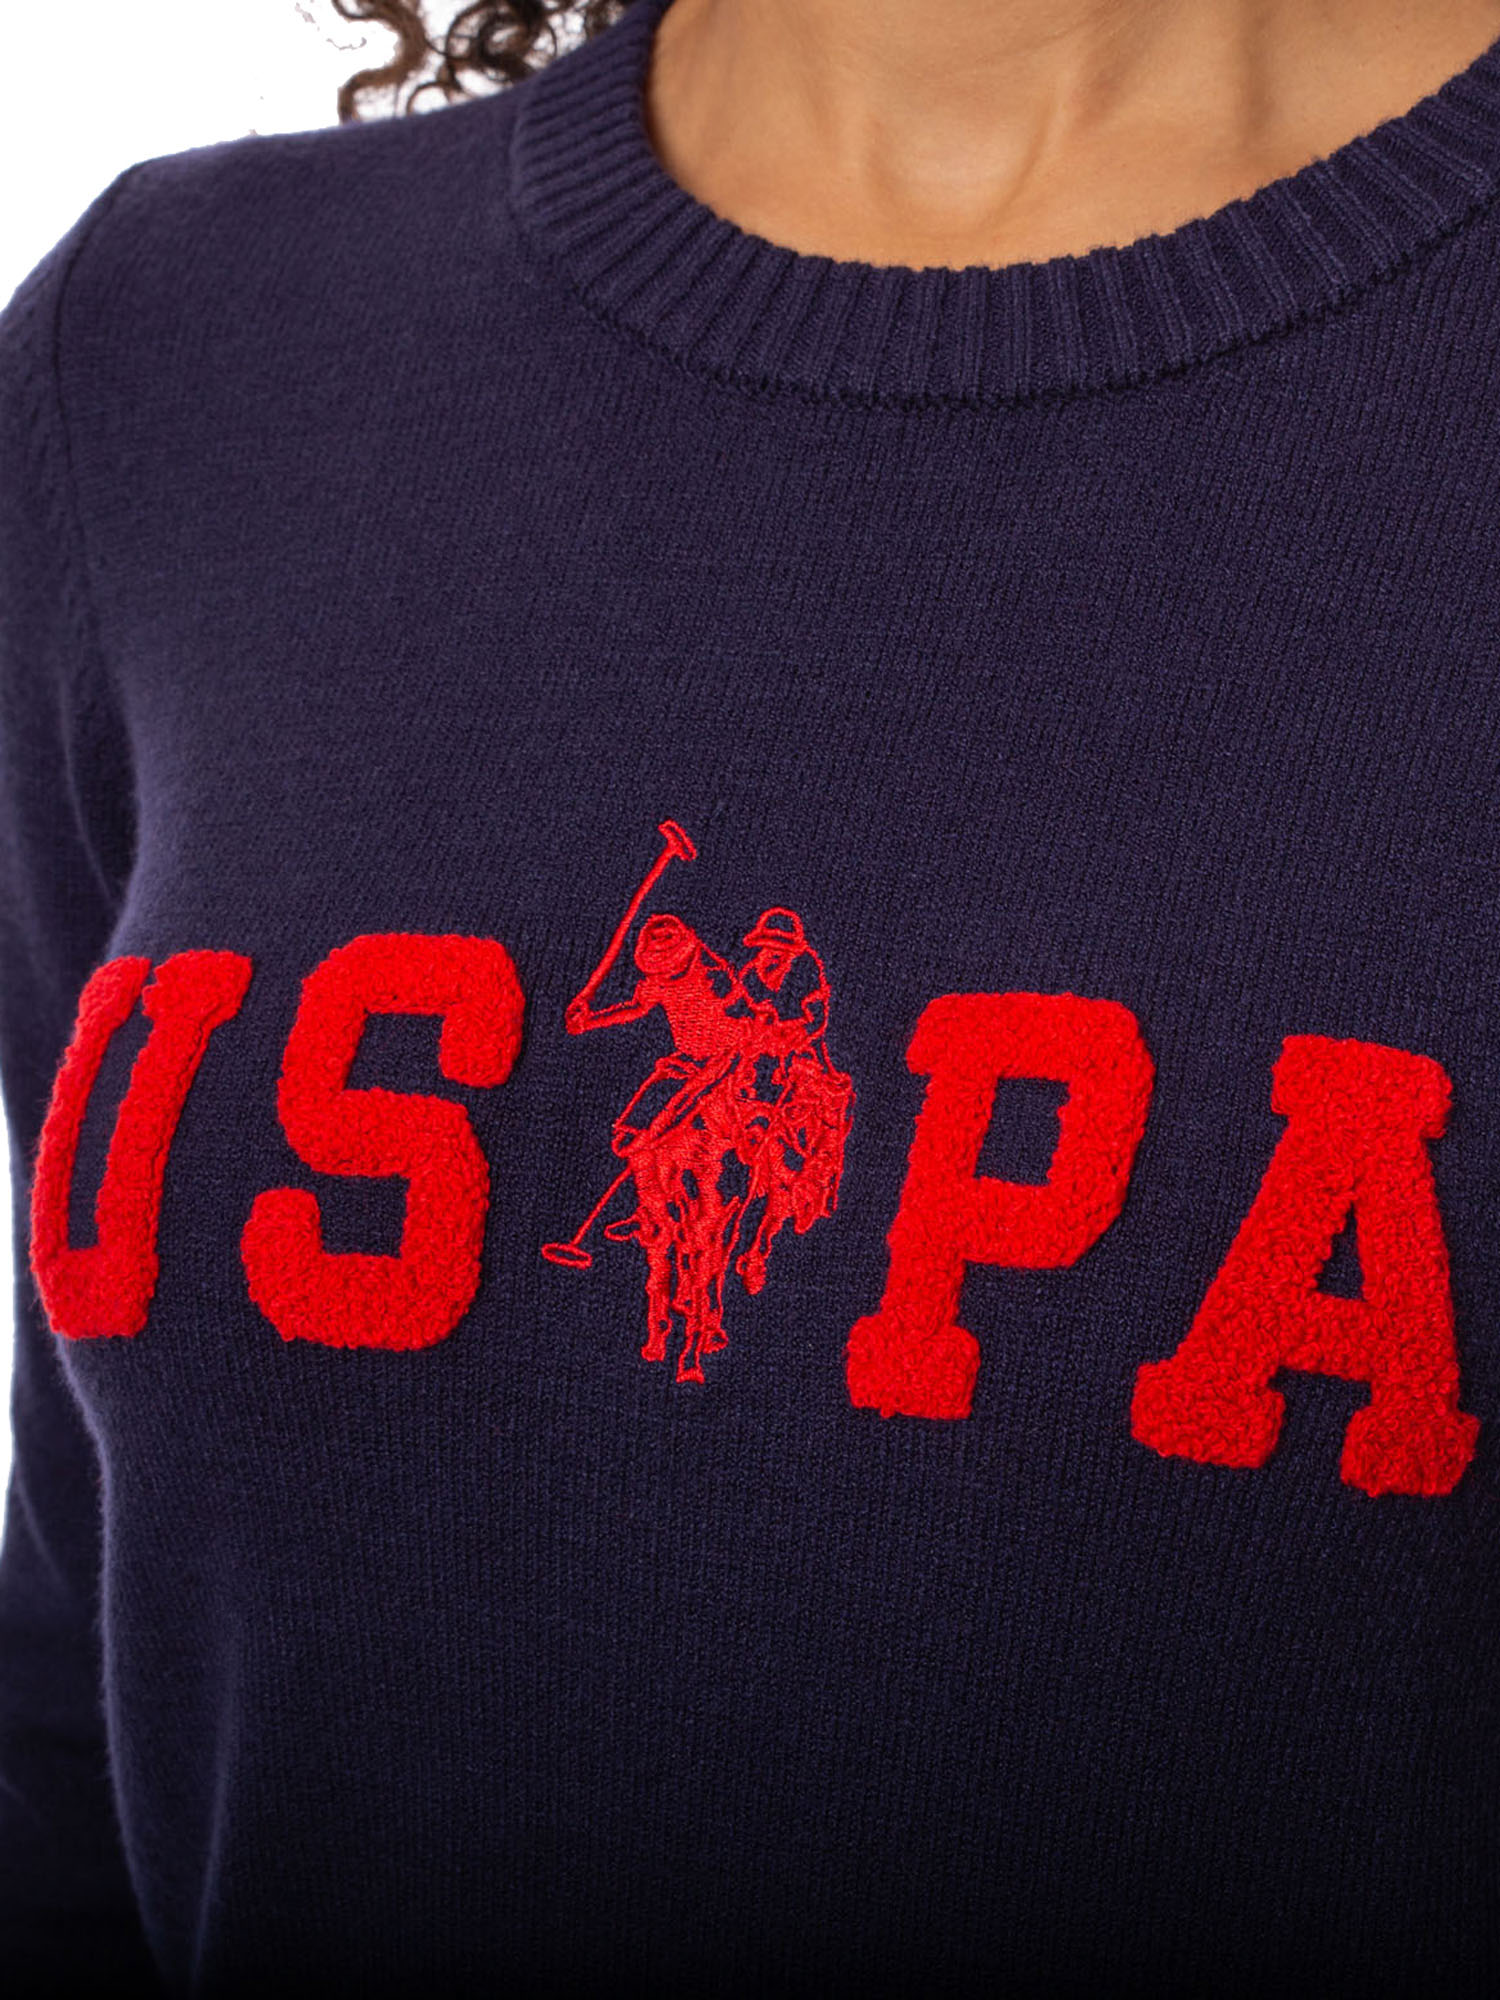 U.S. Polo Assn. Women’s Logo Crewneck Sweater - image 2 of 4